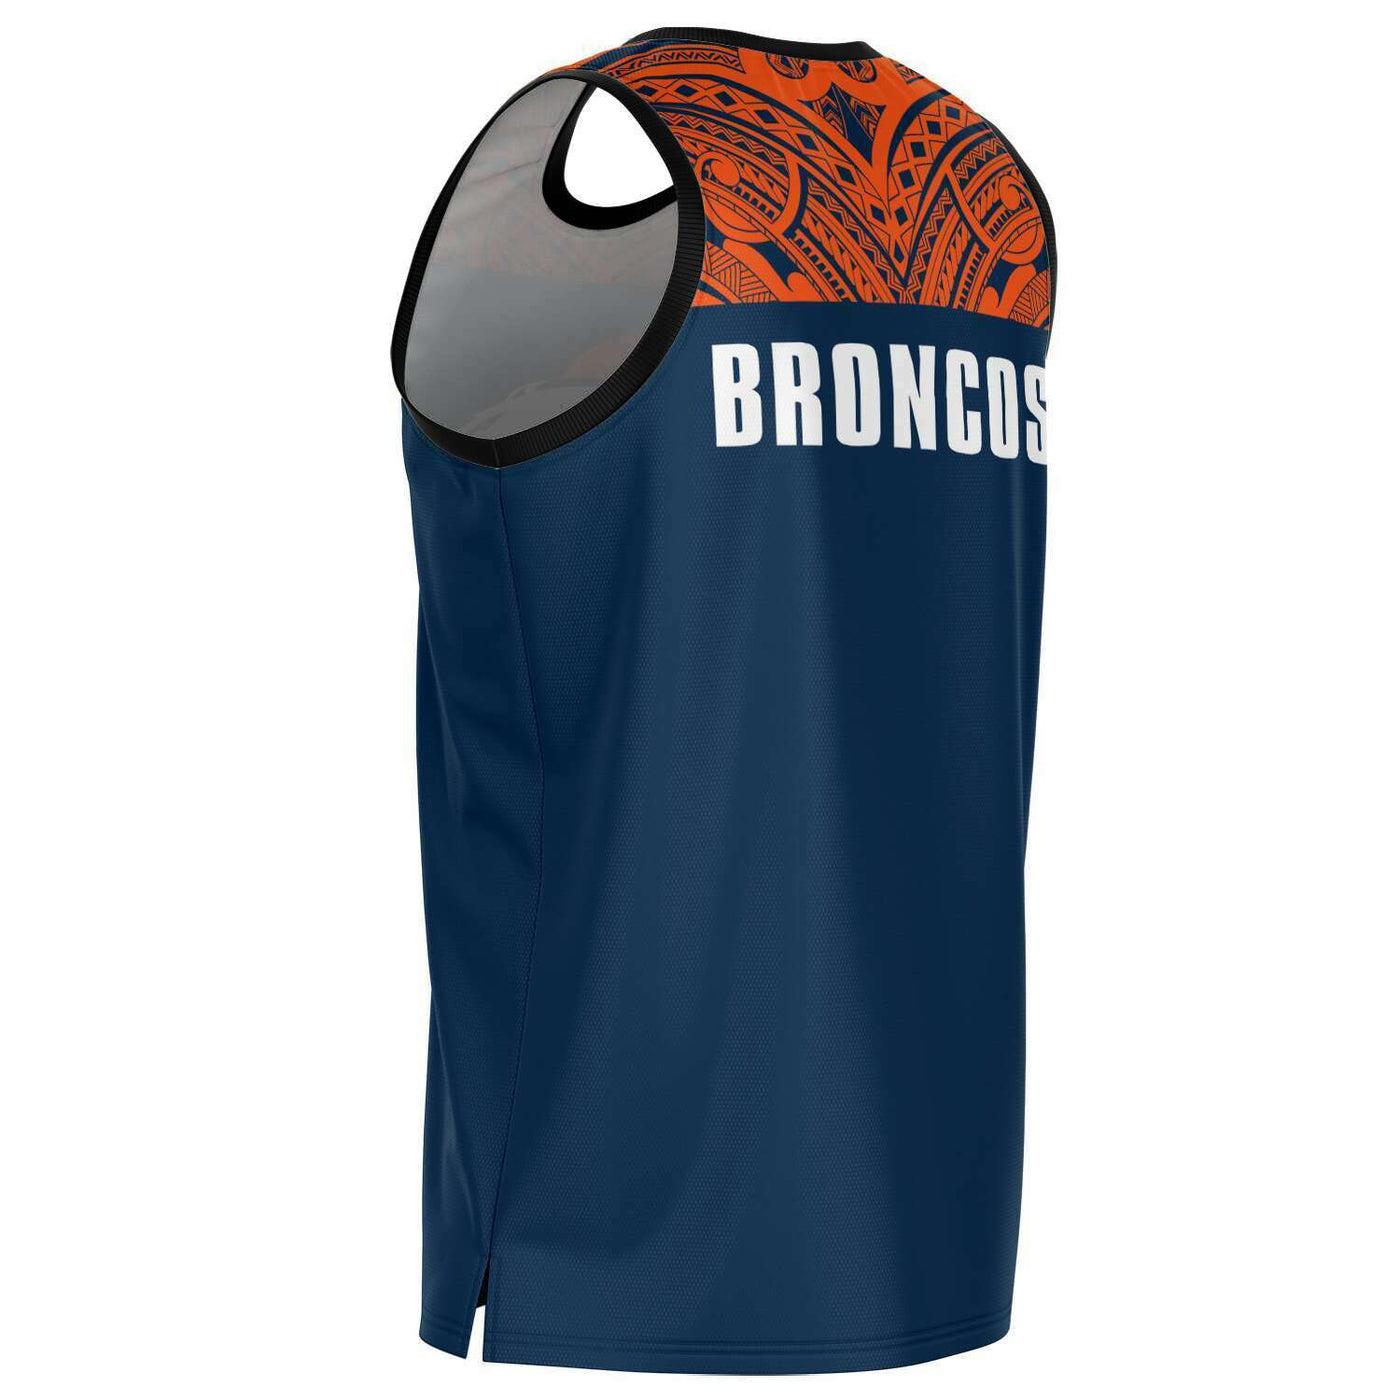 broncos basketball jersey